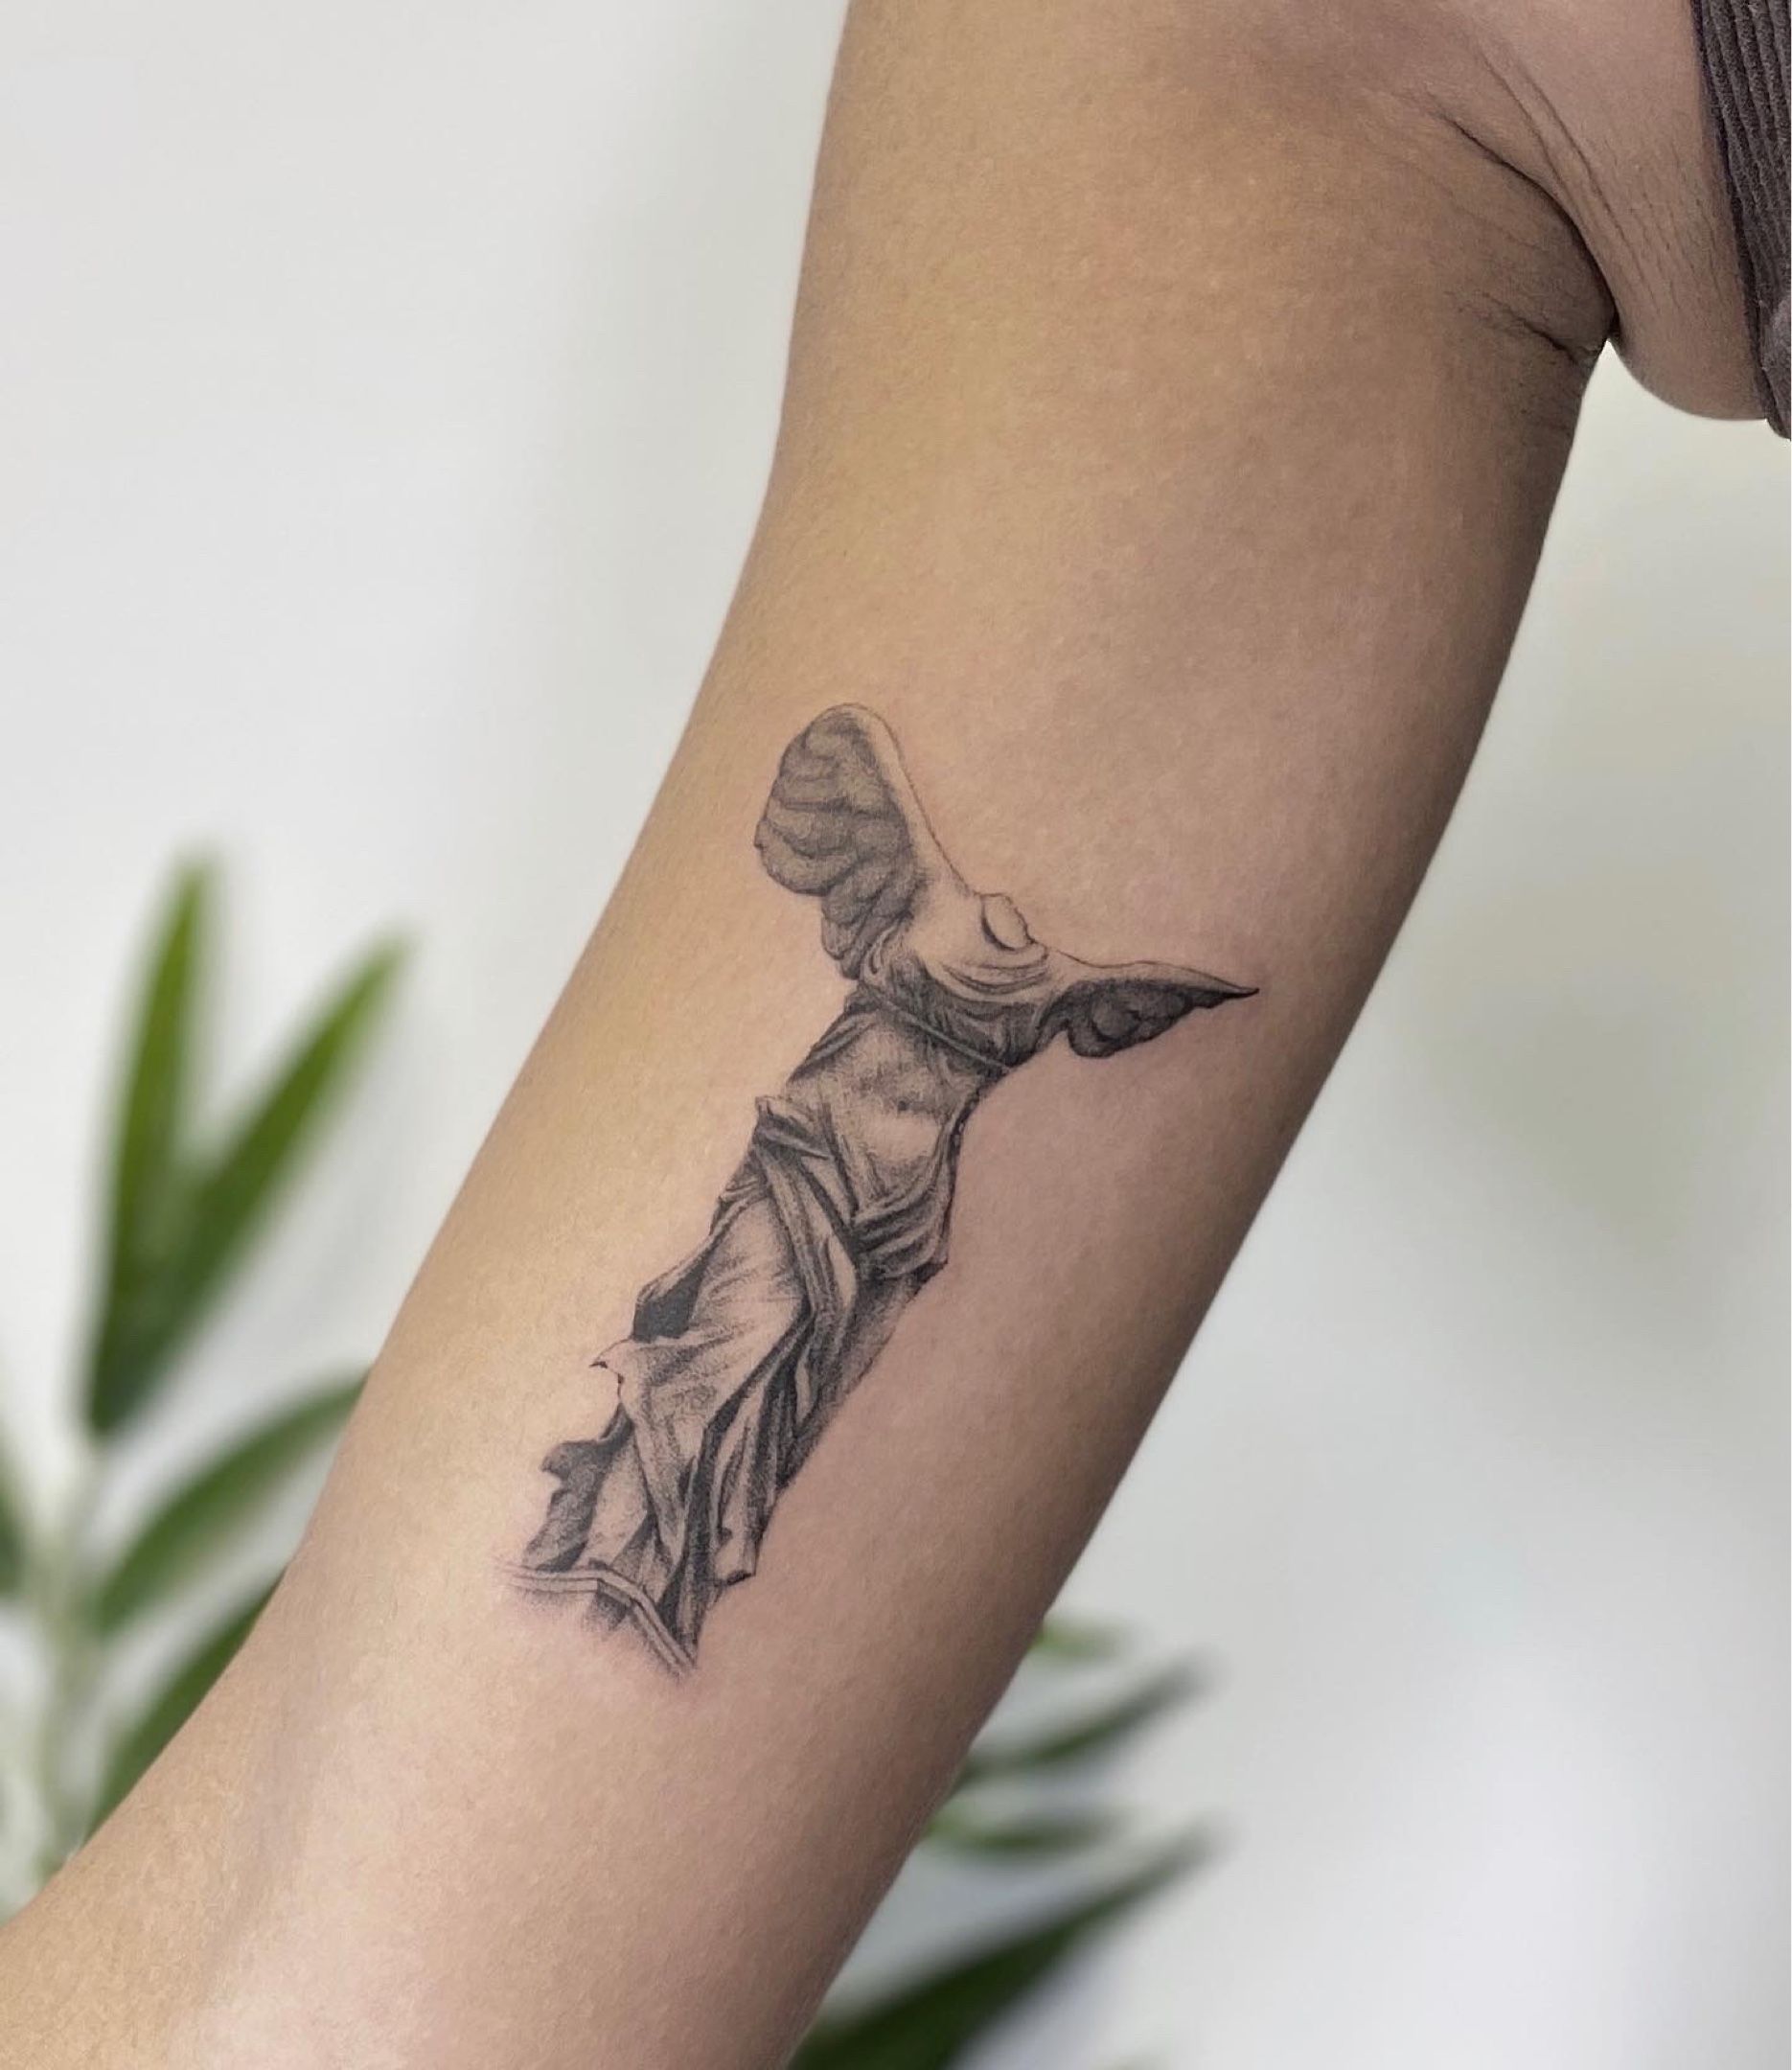 Rami Kintsugi Channels Her Individuality and Healing Nature Through  Tattooing  Tattooed Women